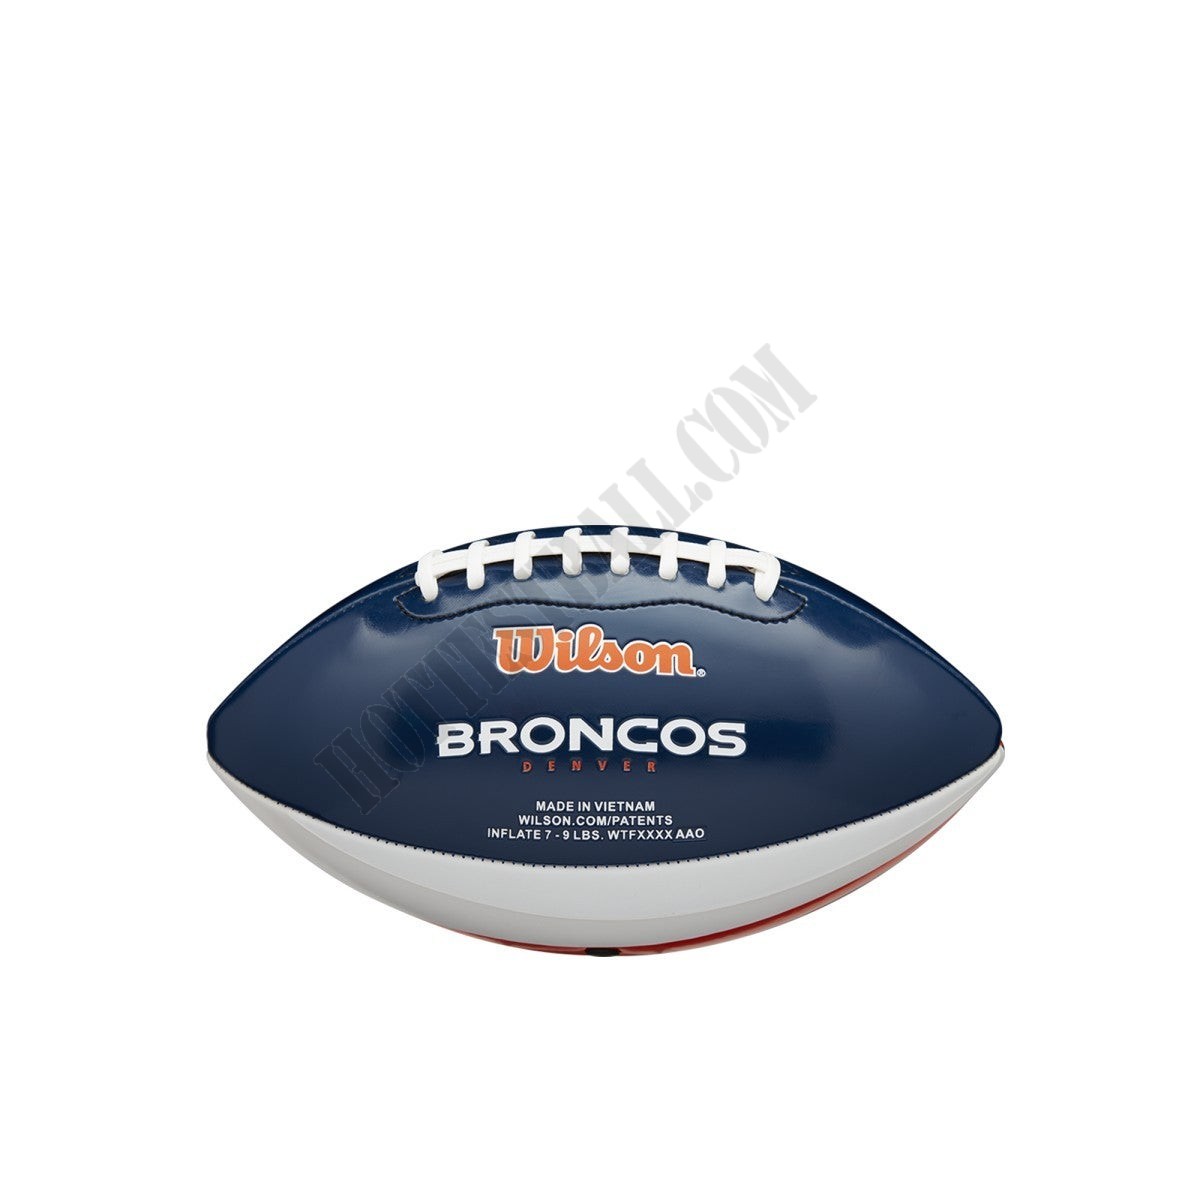 NFL City Pride Football - Denver Broncos ● Wilson Promotions - -1